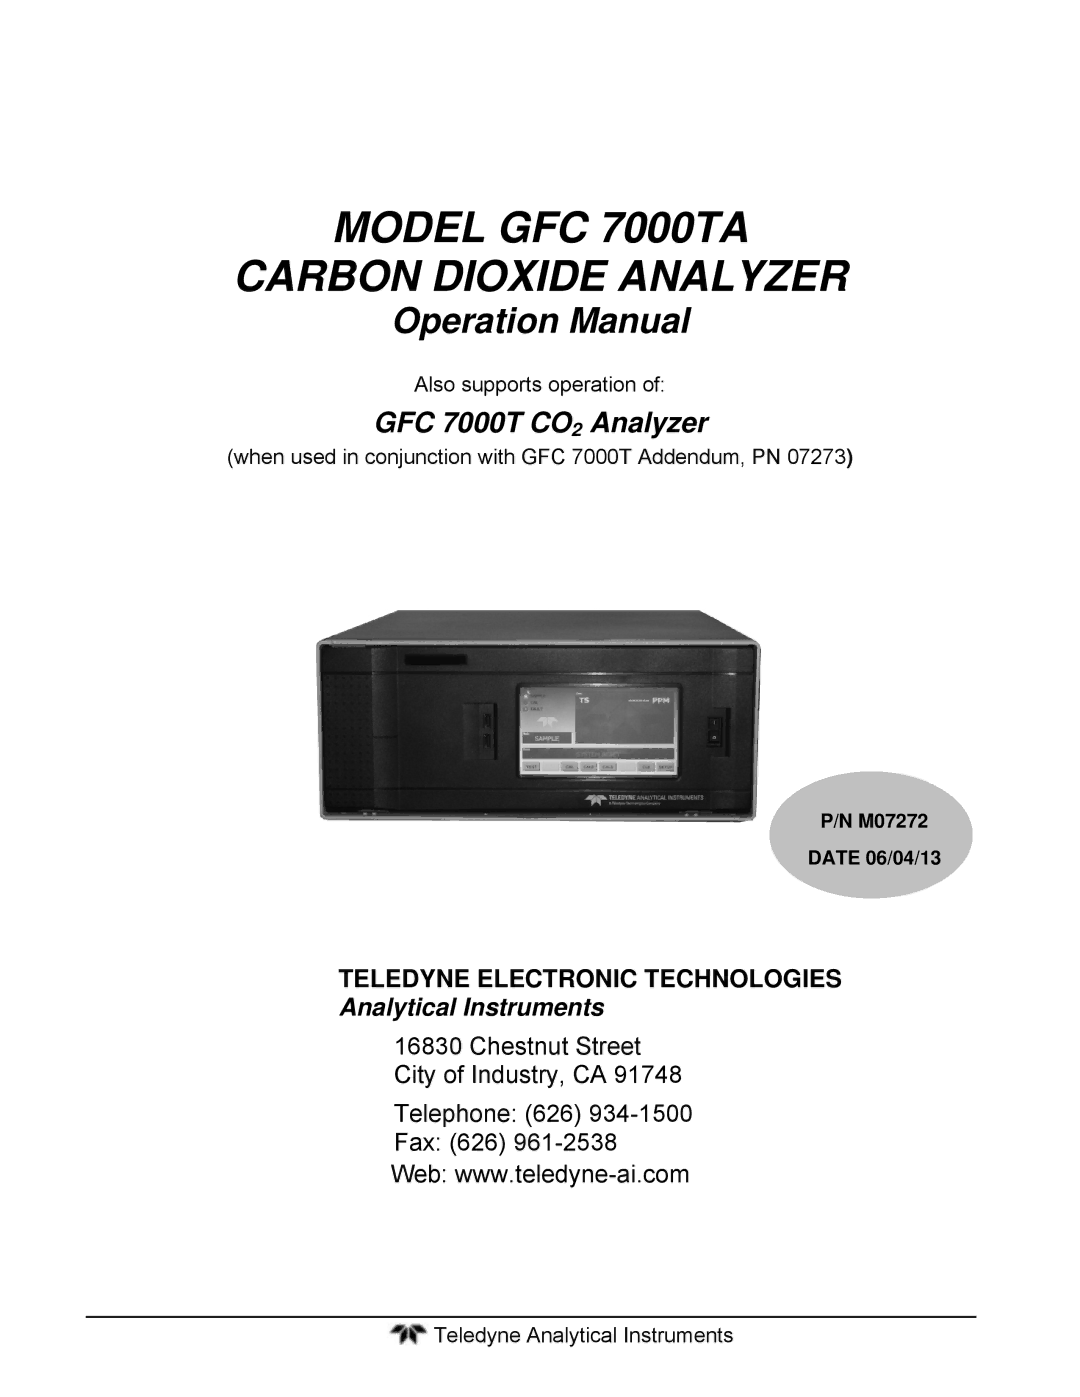 Teledyne gfc 7000ta operation manual Model GFC 7000TA Carbon Dioxide Analyzer 